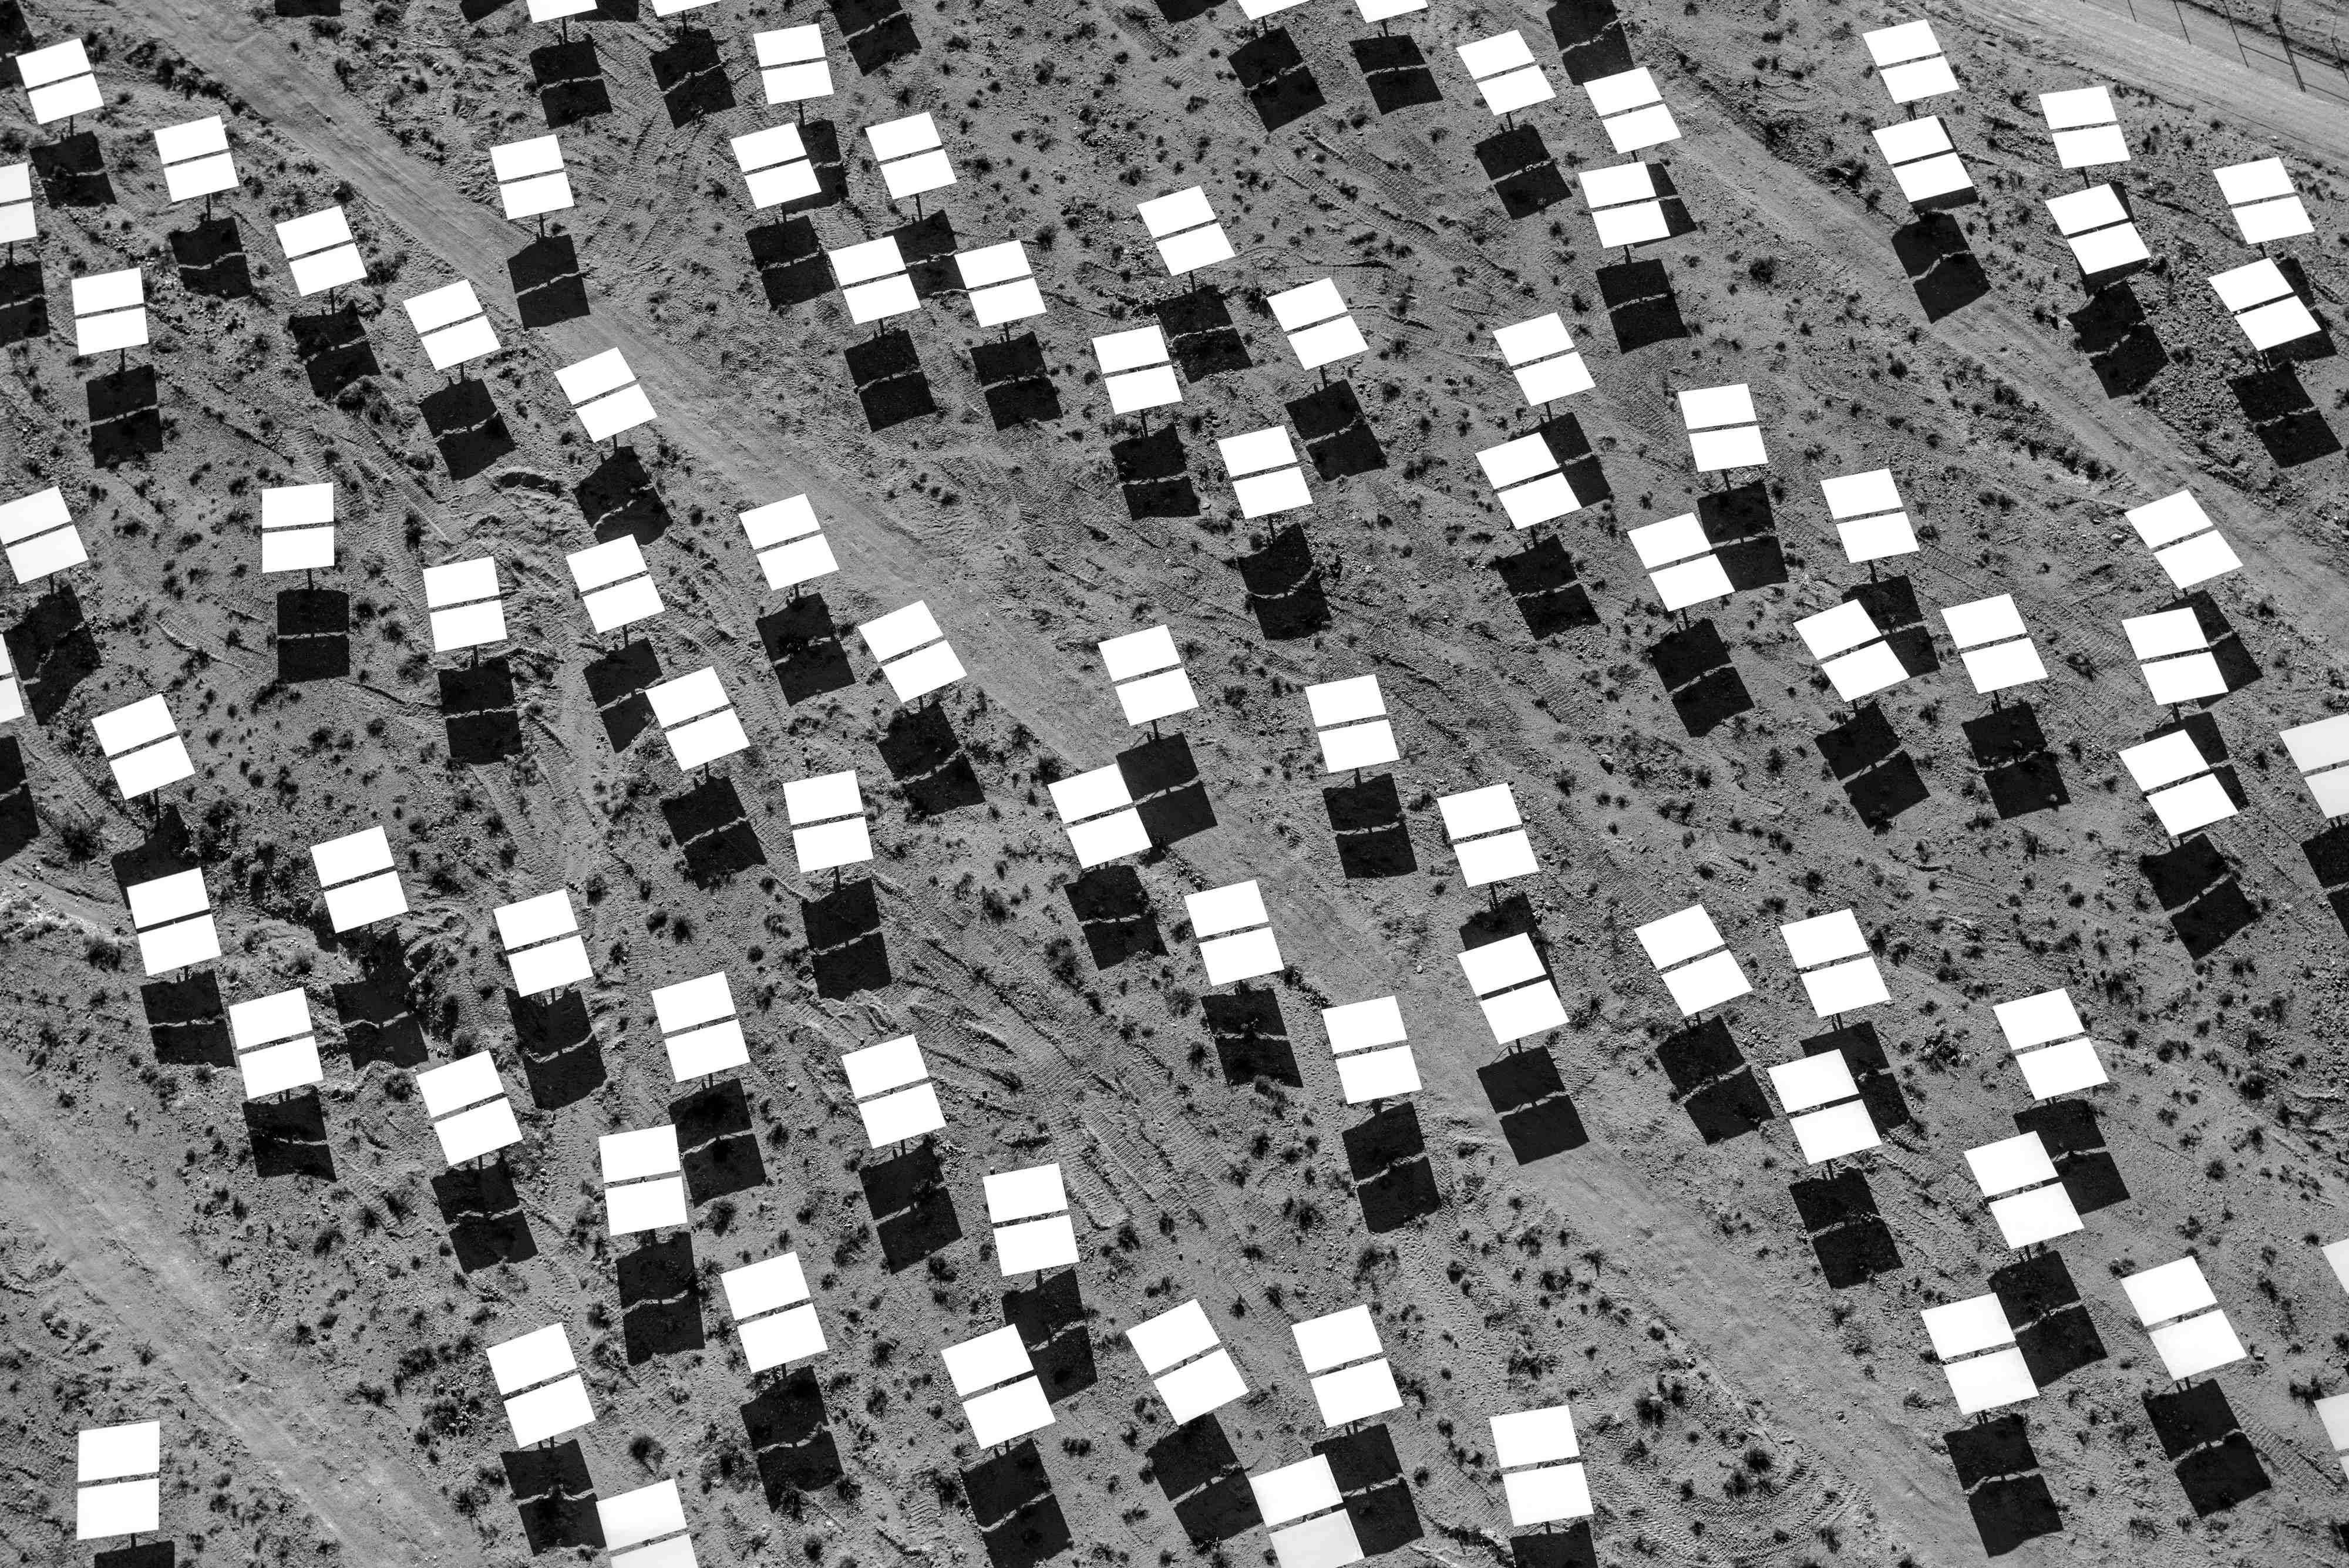 Jamey Stillings Black and White Photograph - Evolution of Ivanpah Solar, #6425, 2 June 2012